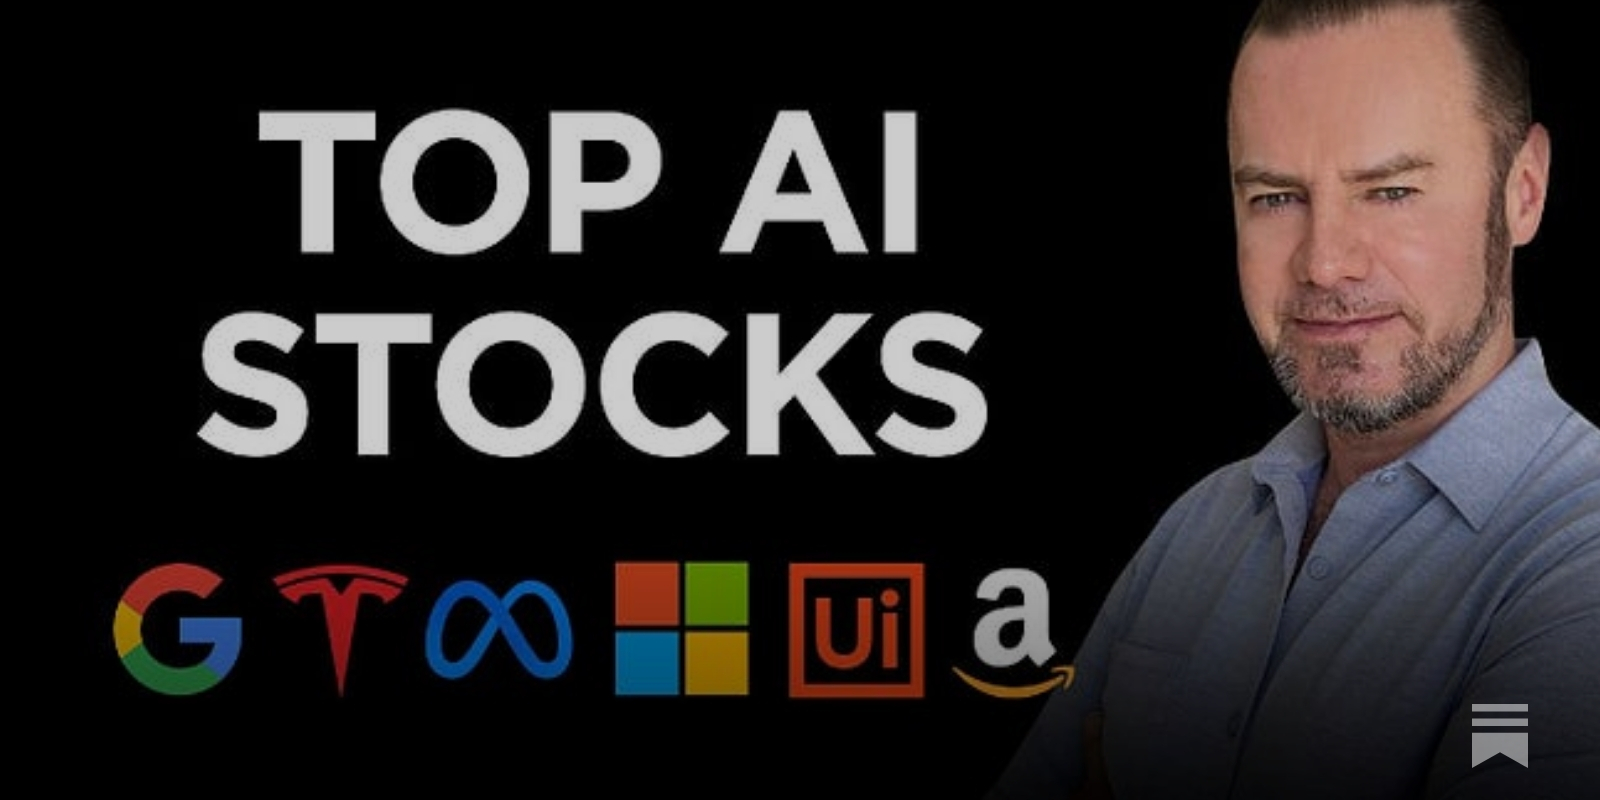 RECAP: TOP AI STOCKS - InvestAnswers Newsletter